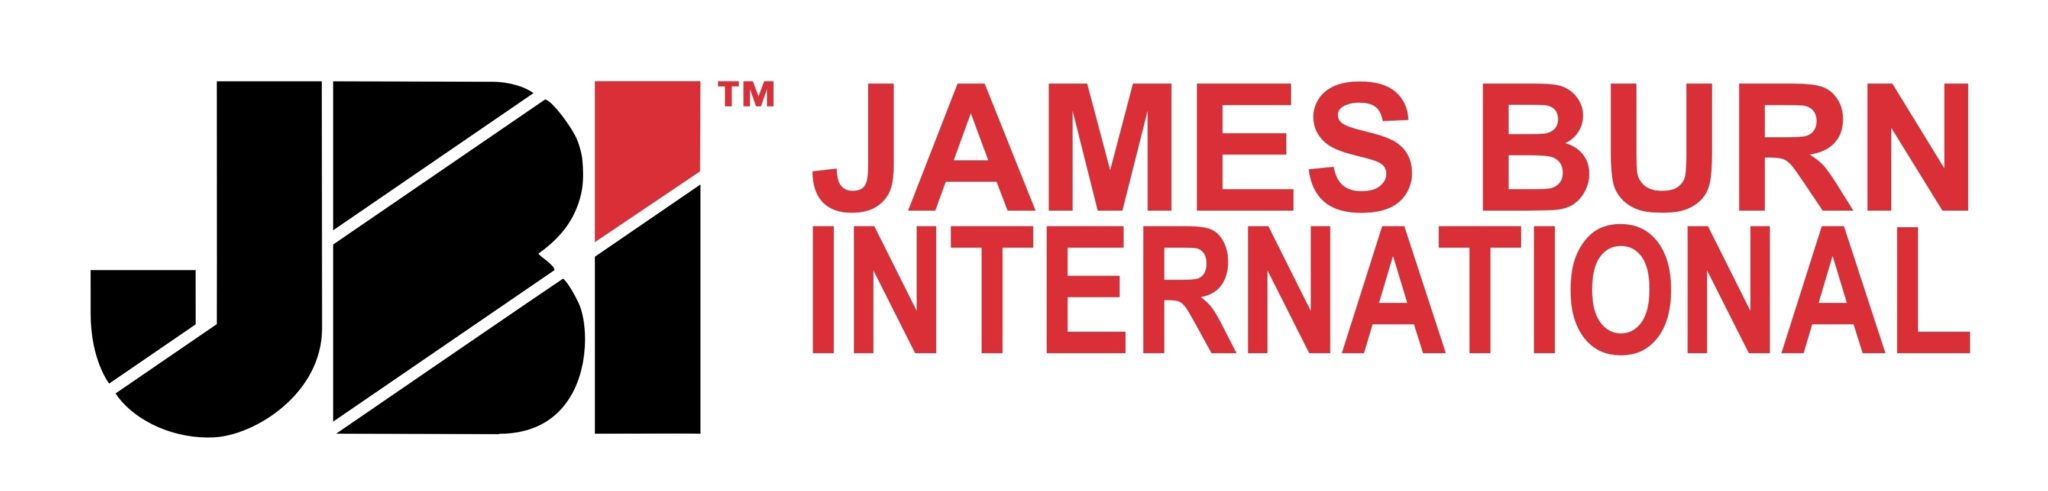 JBI - James Burn Int. logo